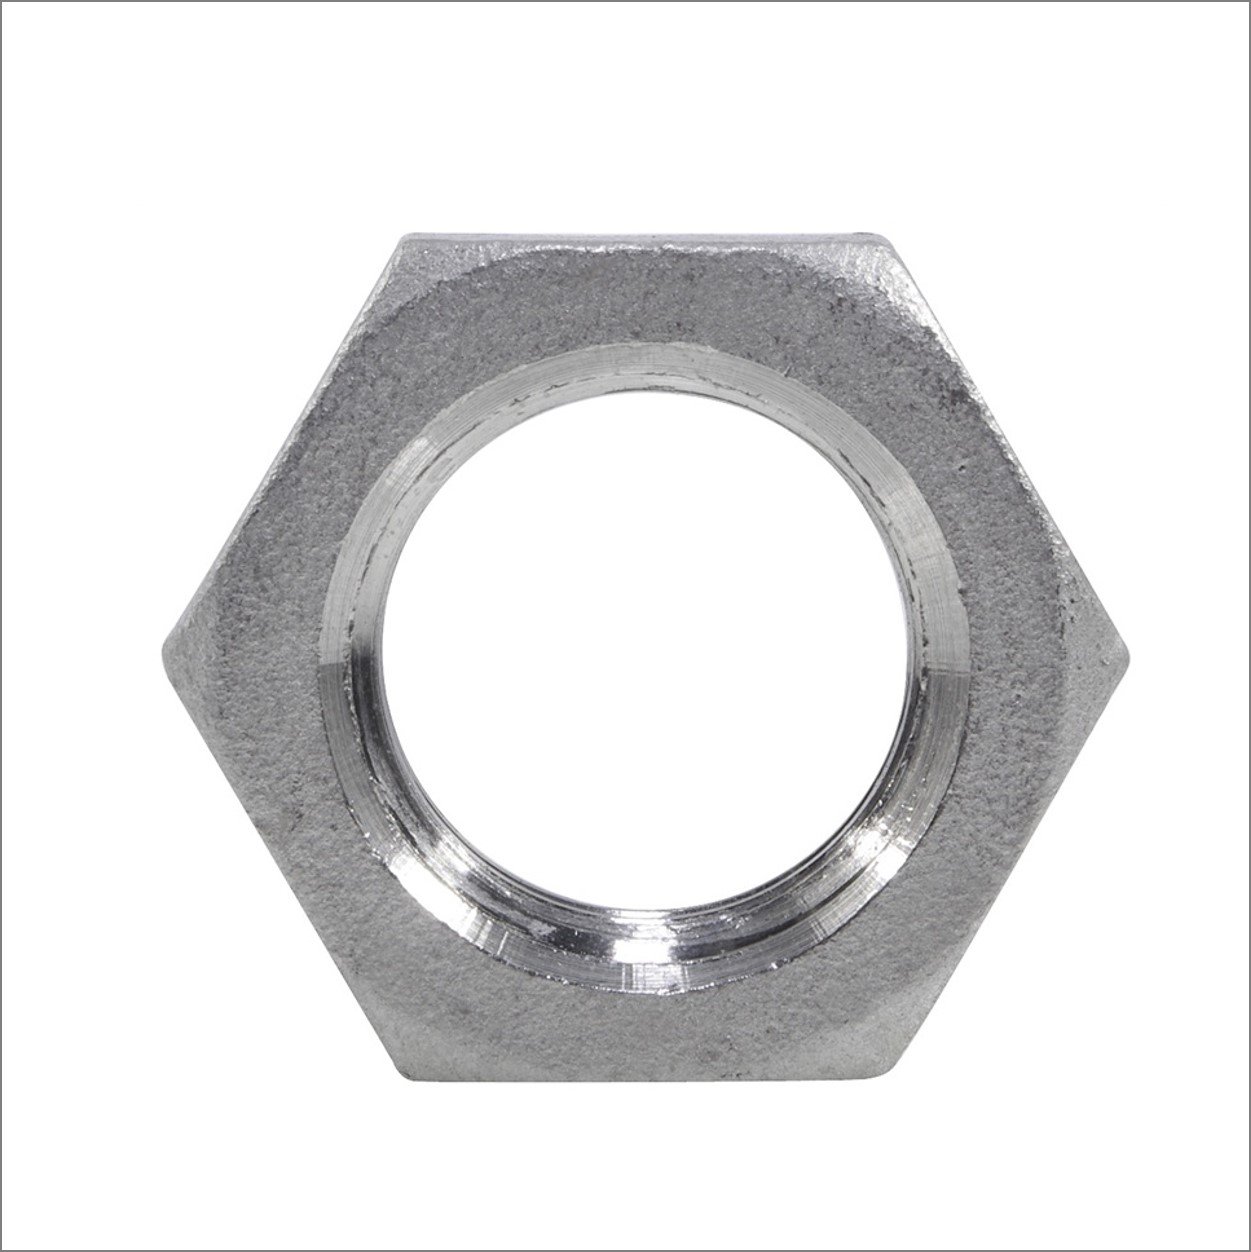 stainless-steel-hexagon-locknut-bsp